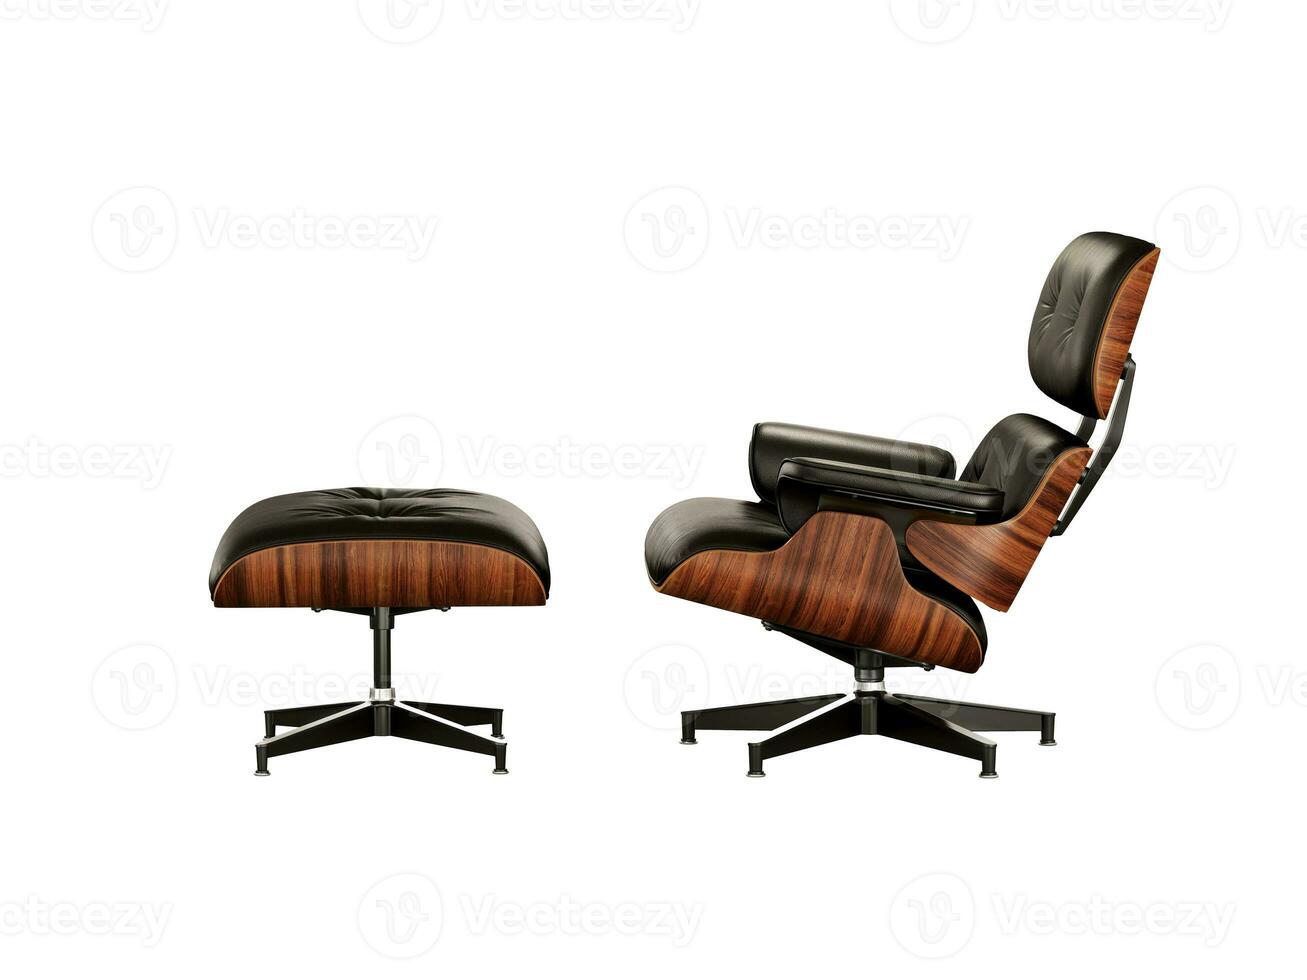 hoog kwaliteit 3d renderen van Eames lounge stoel foto